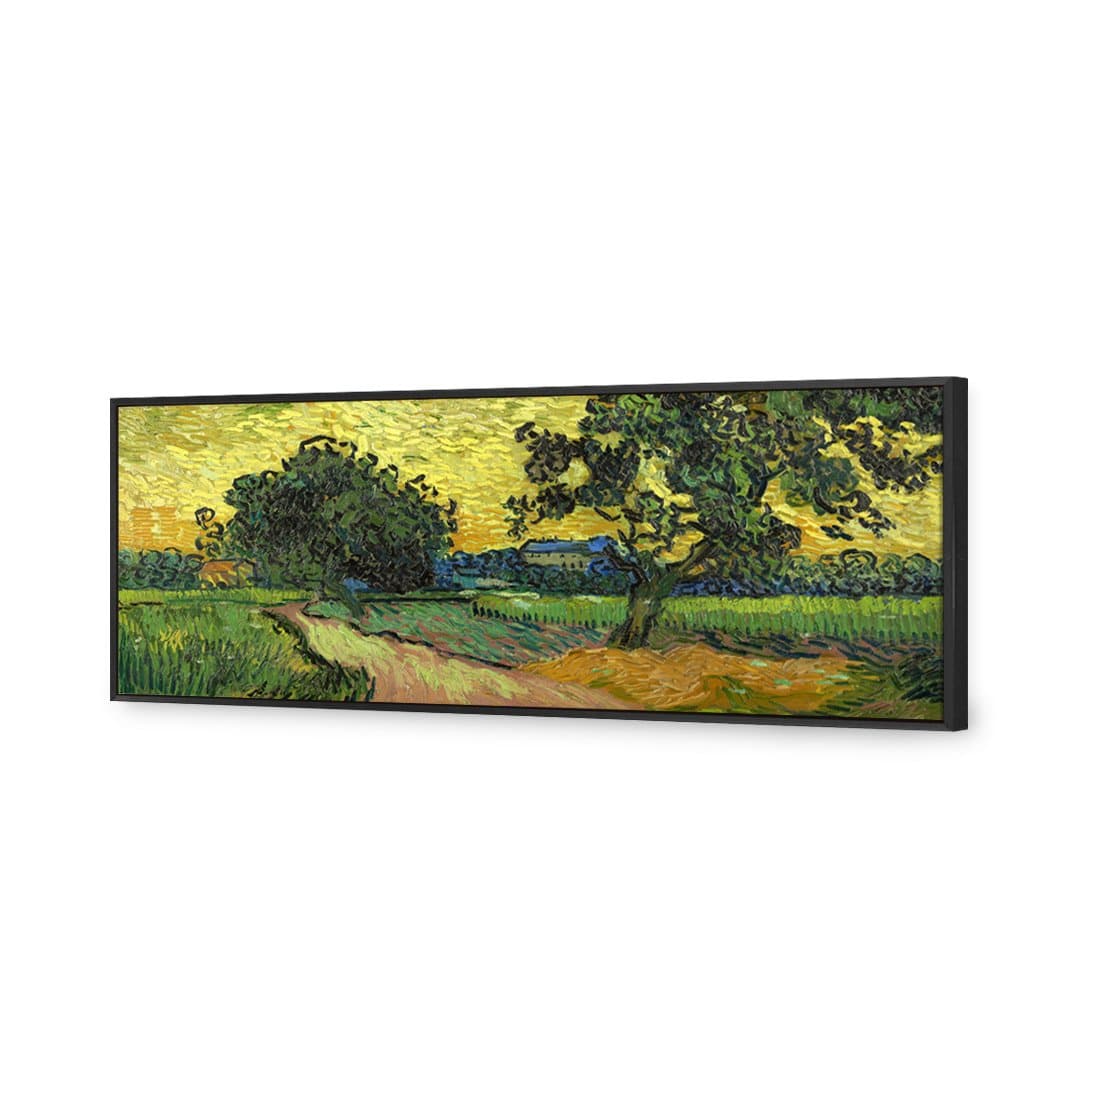 Landscape At Twilight - Van Gogh Canvas Art-Canvas-Wall Art Designs-60x20cm-Canvas - Black Frame-Wall Art Designs